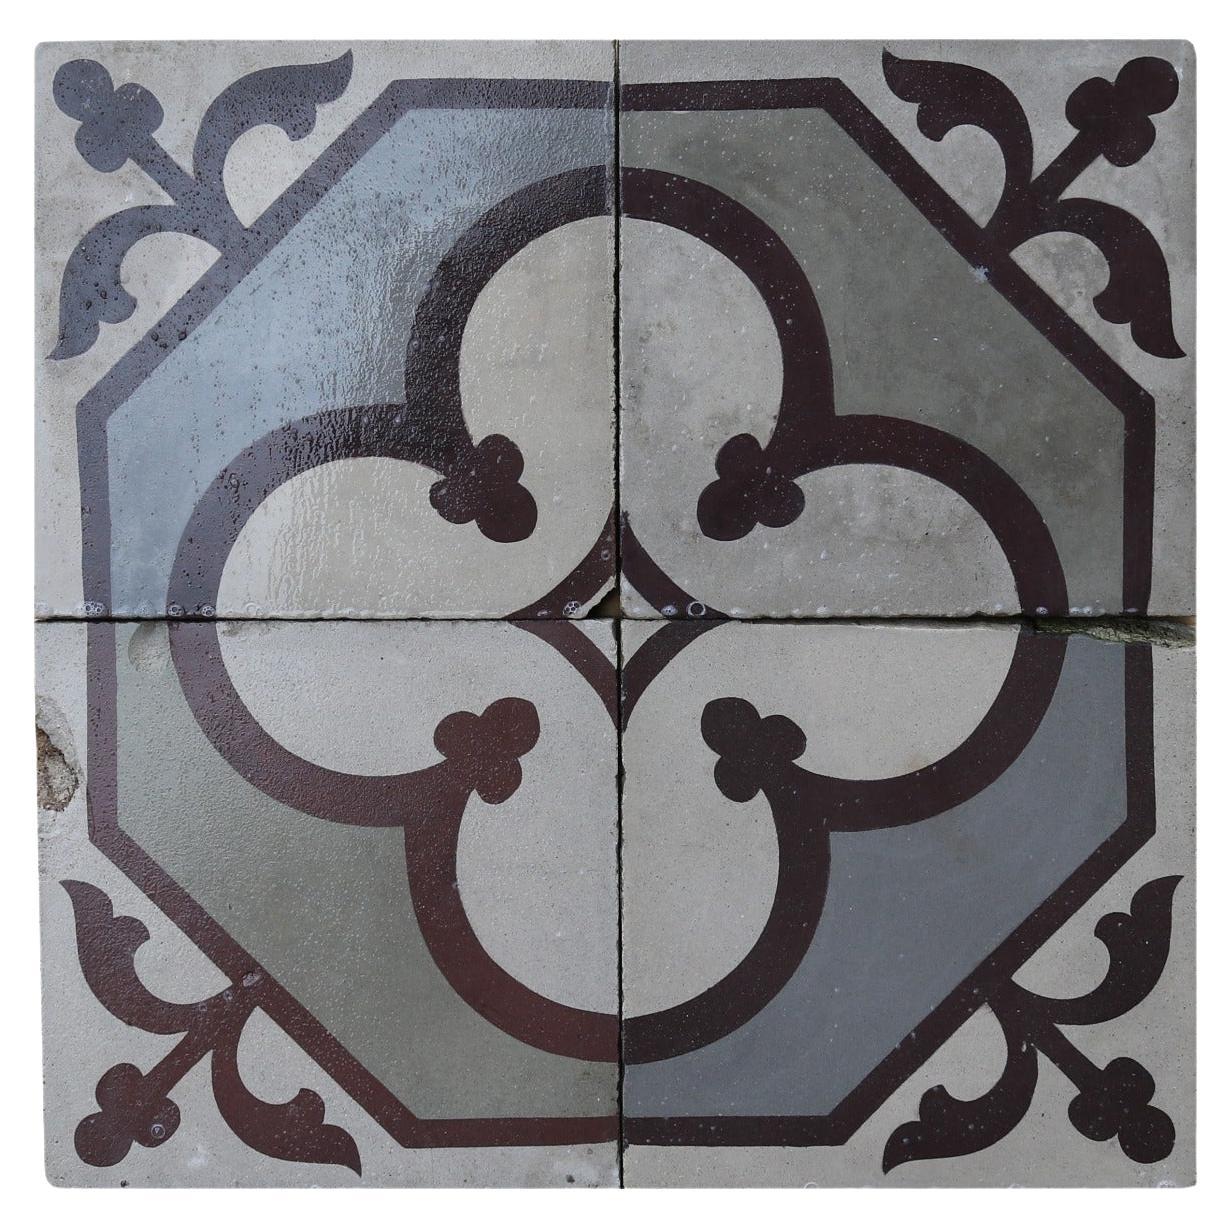 What are encaustic floor tiles?